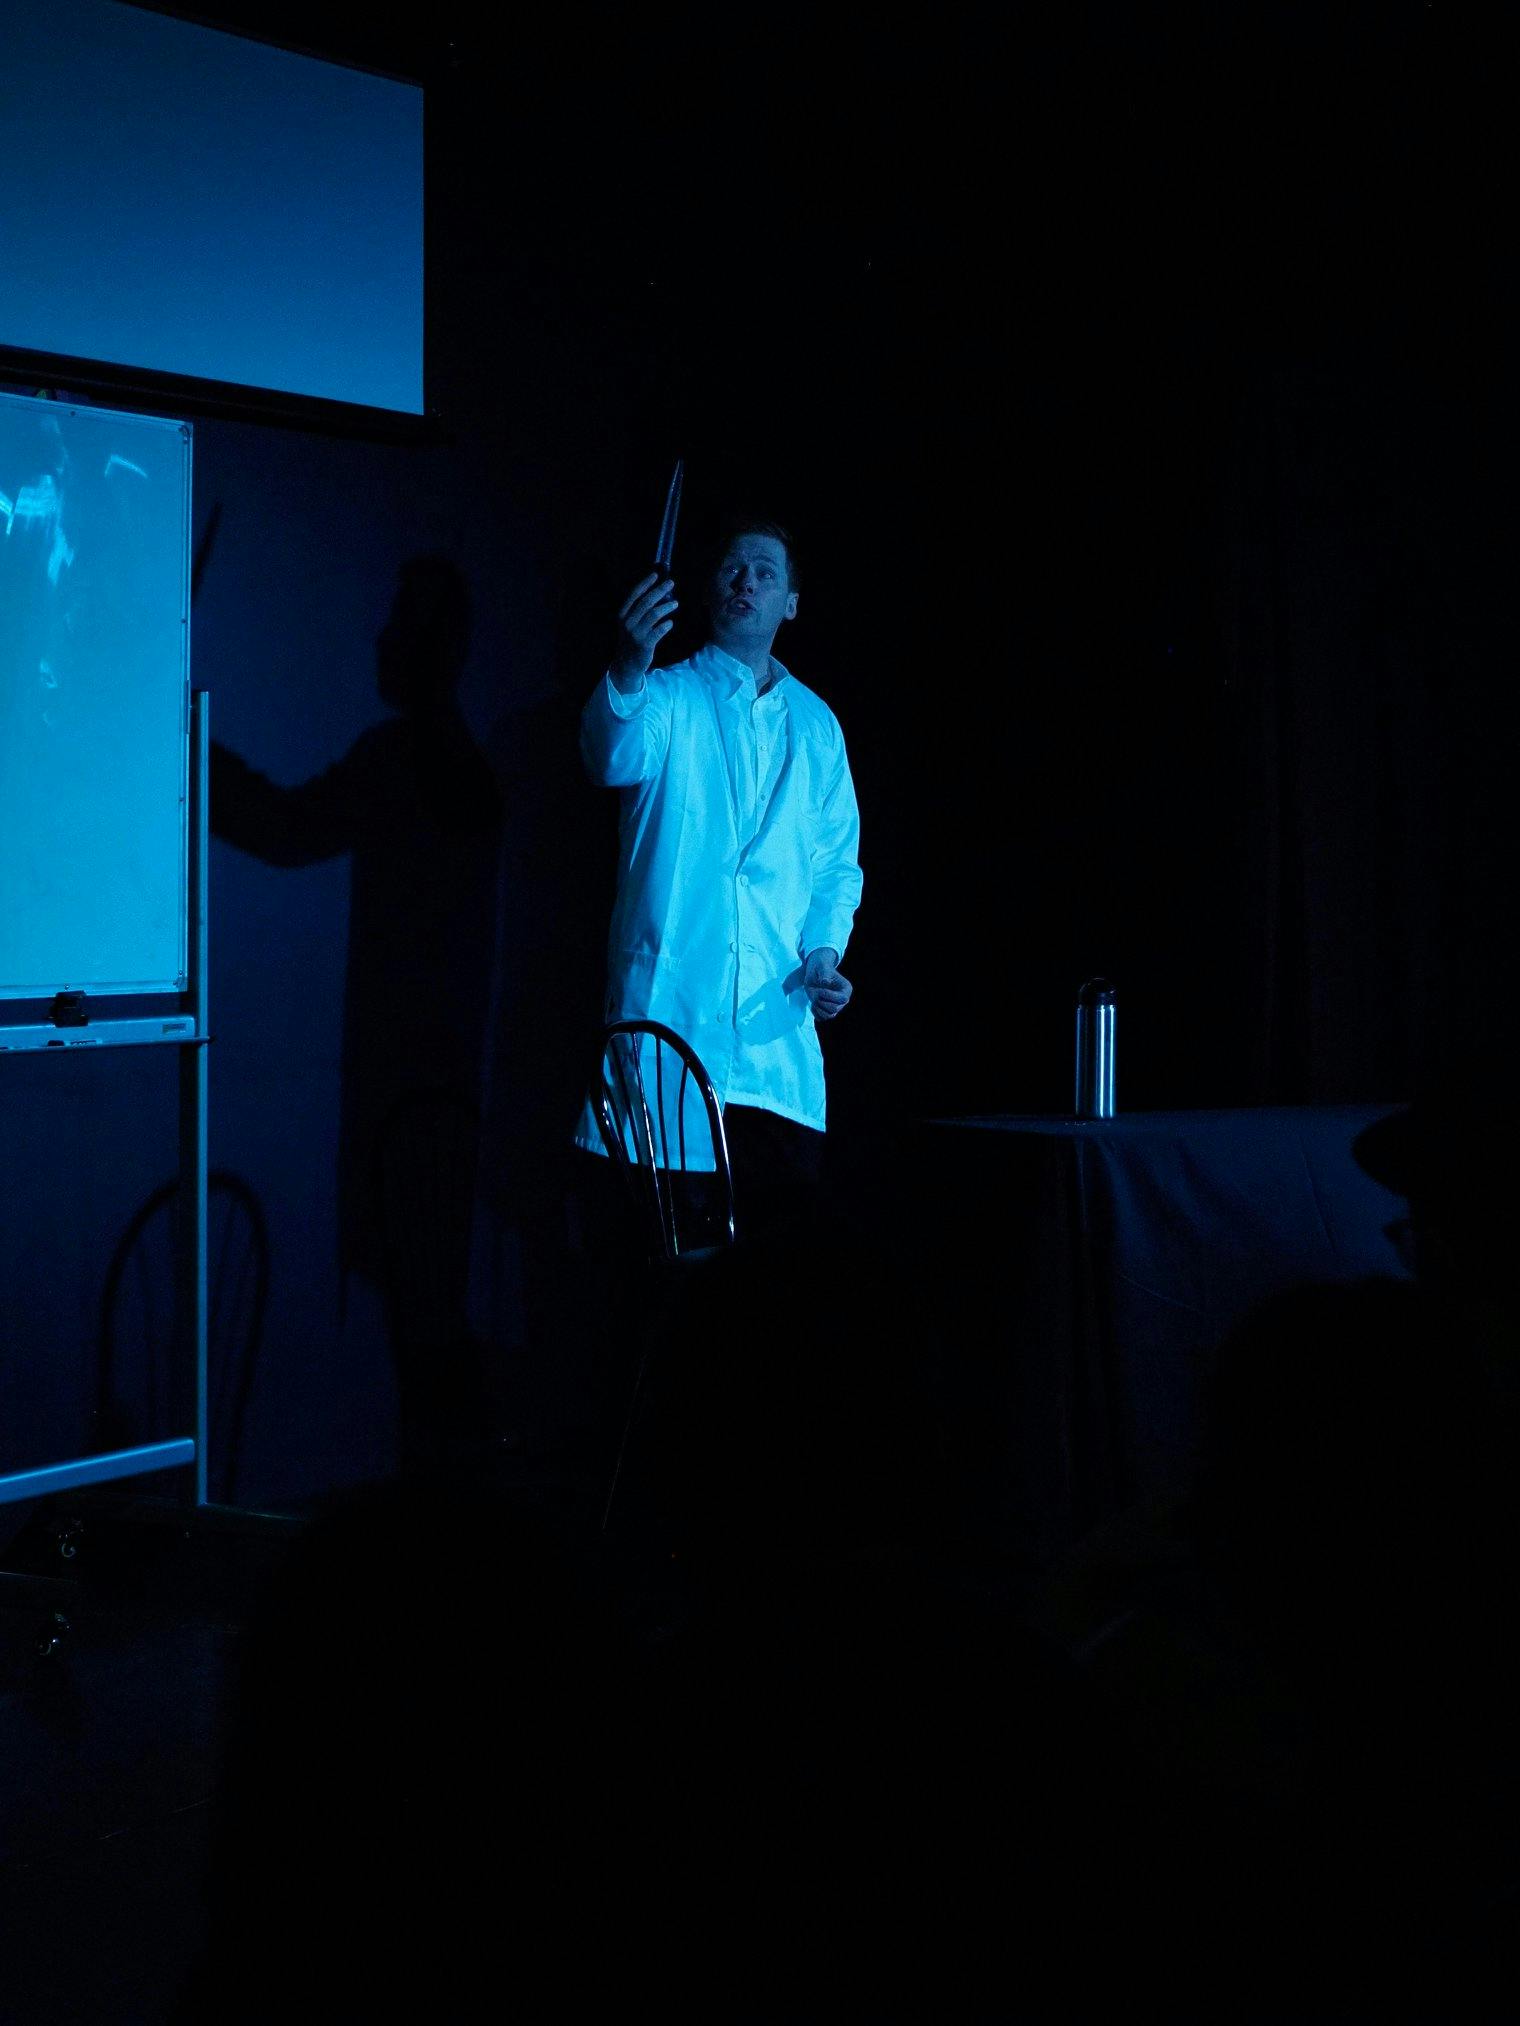 Jerome as Dr. Jekyl
(📸️ Photo by Bob Shields)